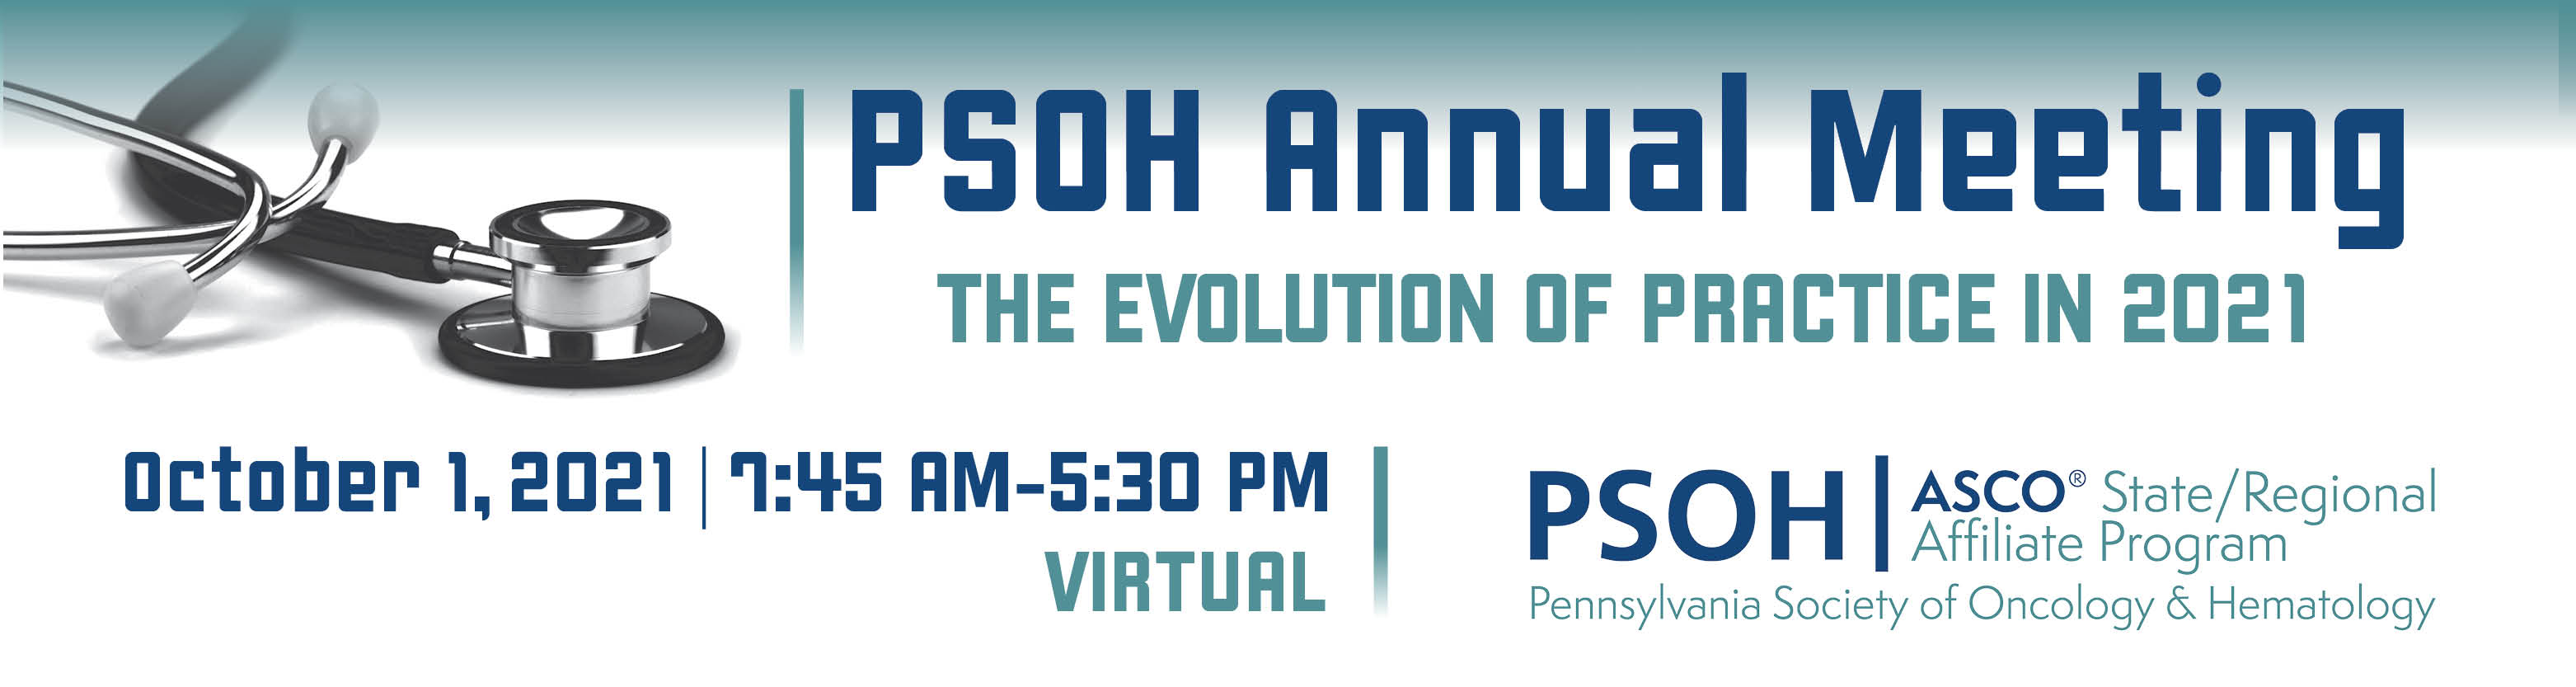 2021 PSOH Annual Meeting